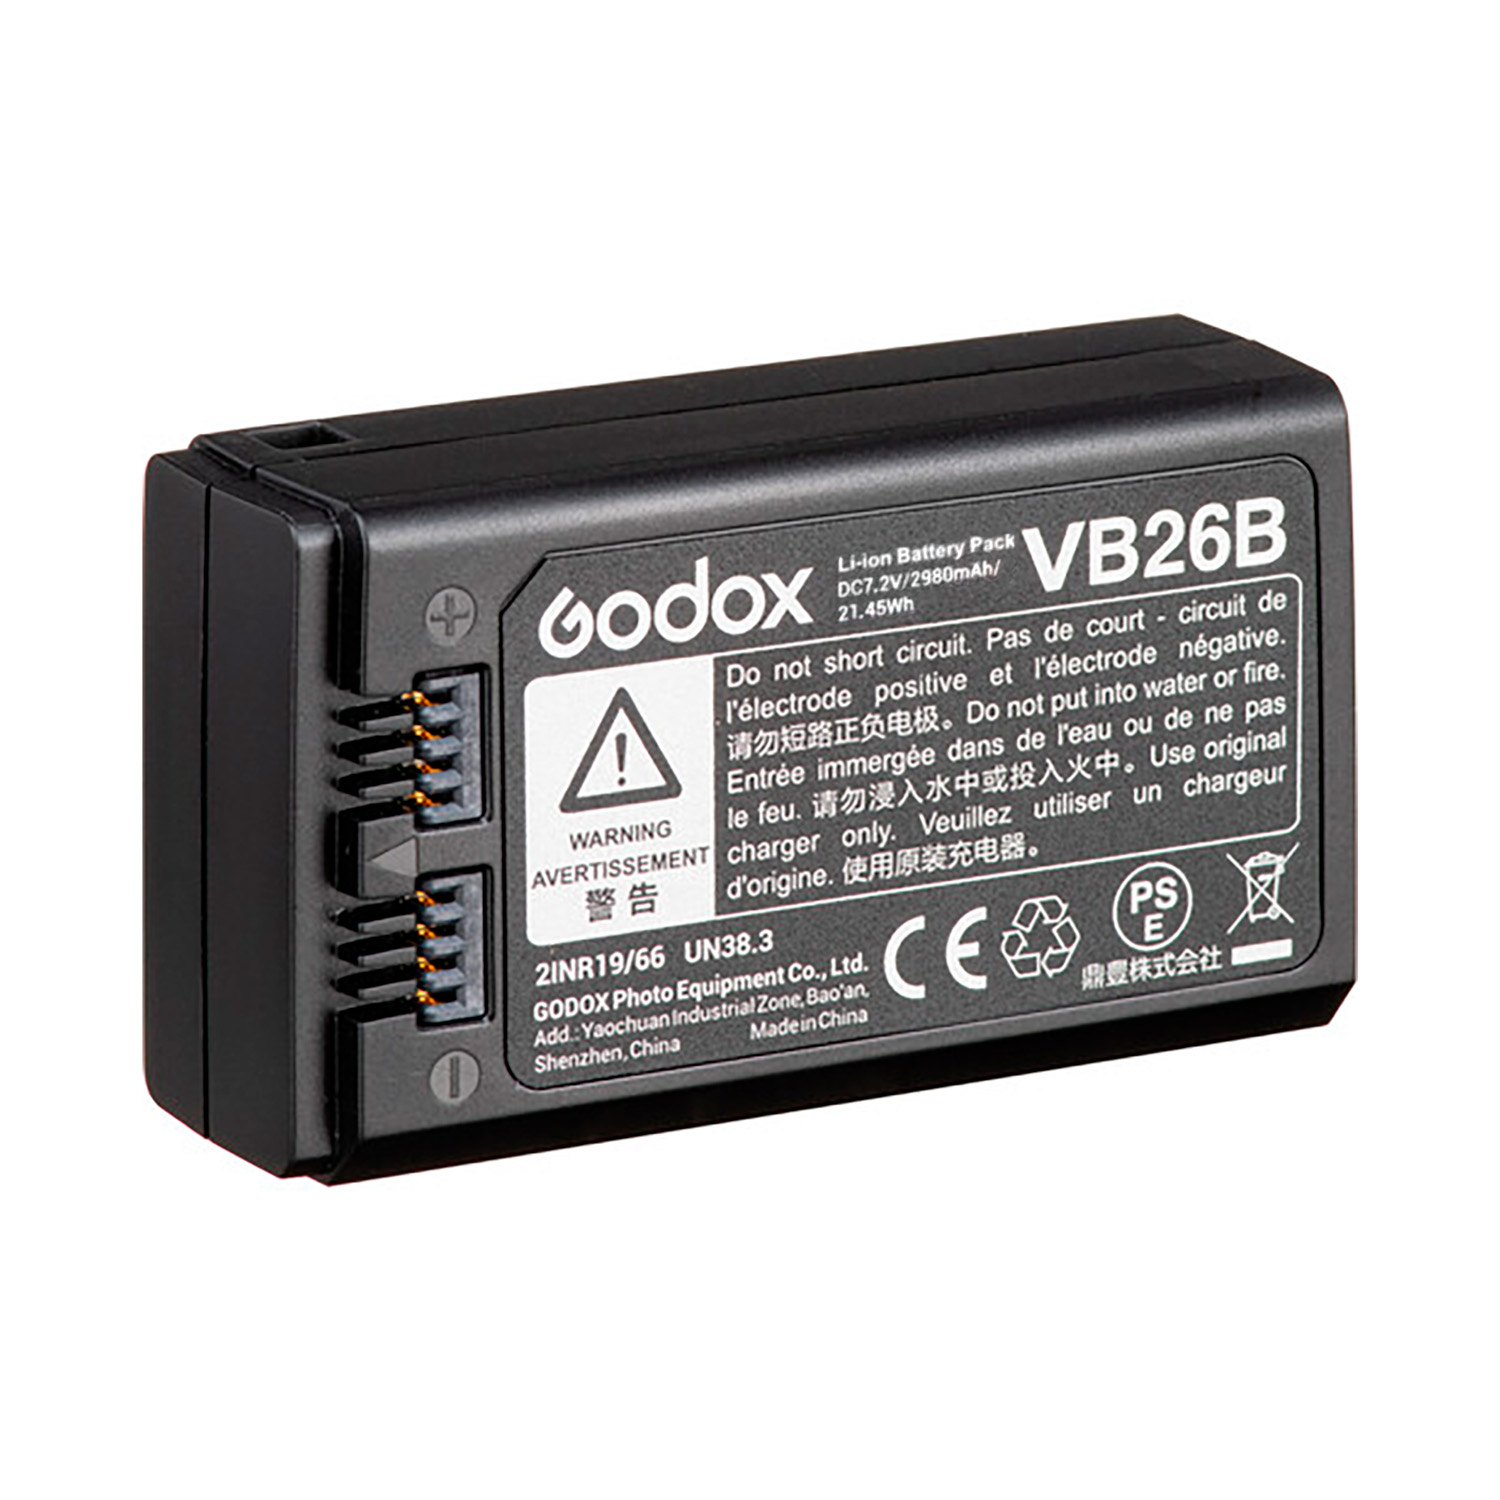   Godox VB26B   V1, V860III, V850III. AD100 Pro   Ultra-mart